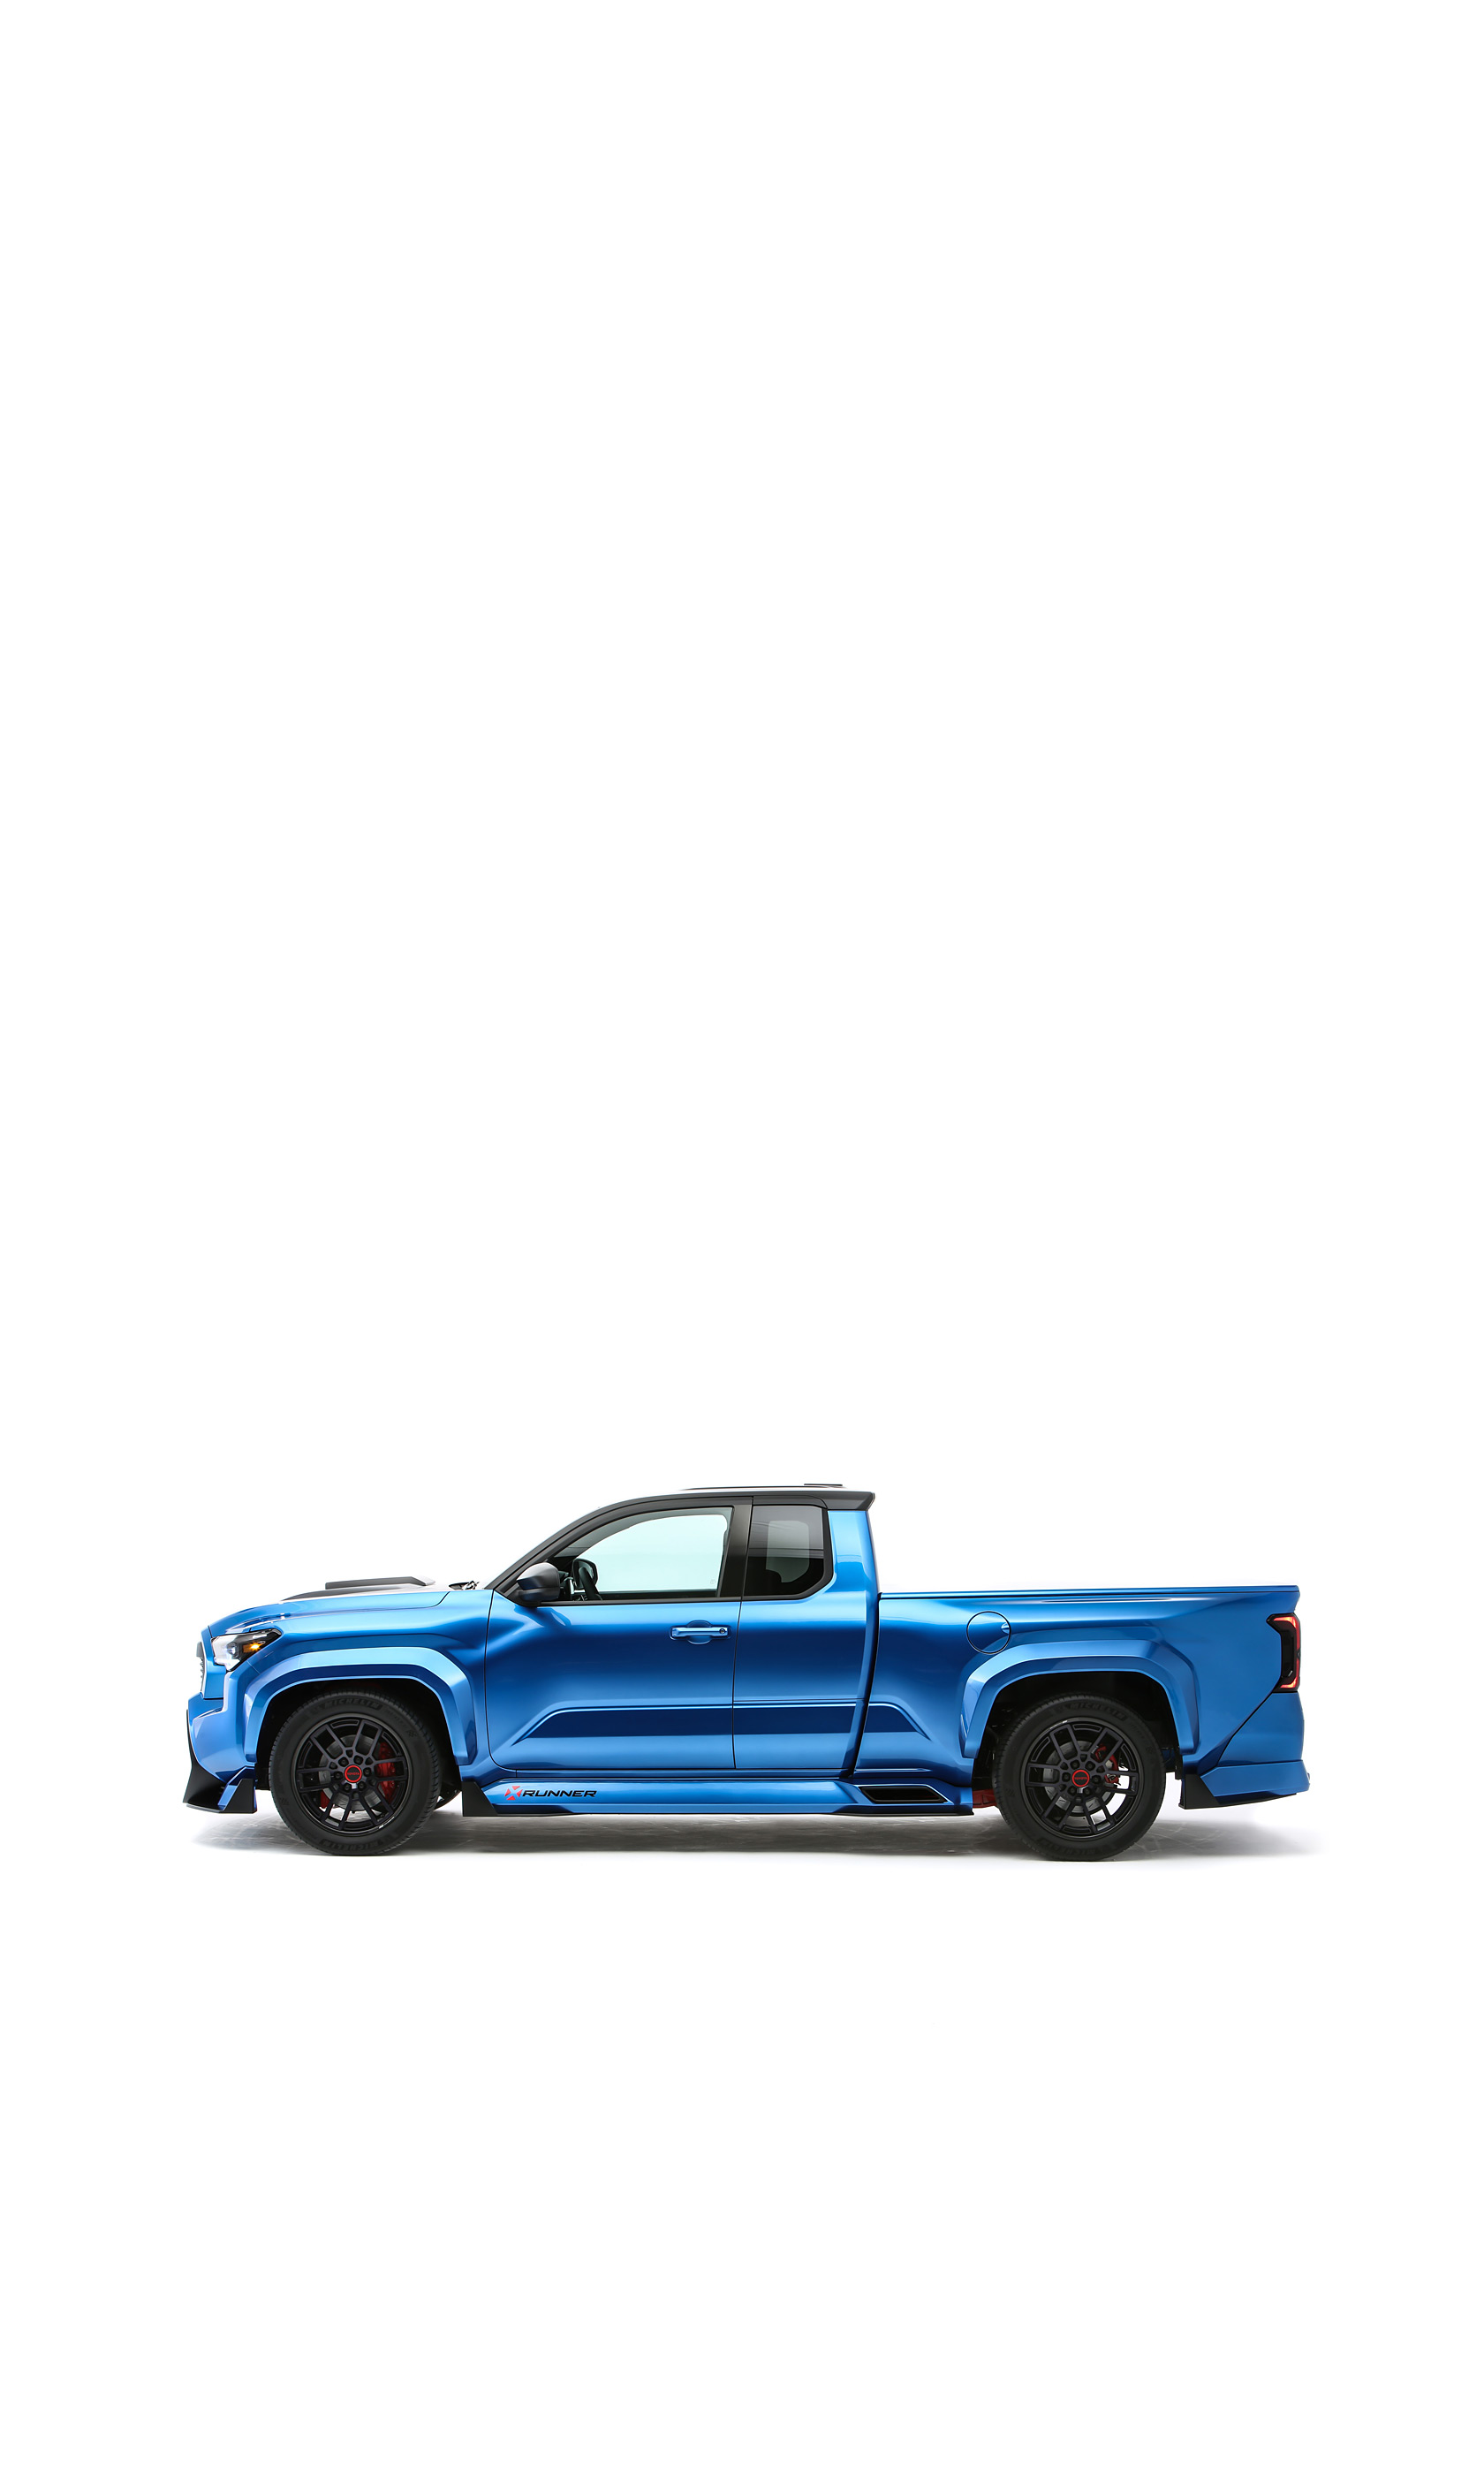  2023 Toyota Tacoma X-Runner Concept Wallpaper.